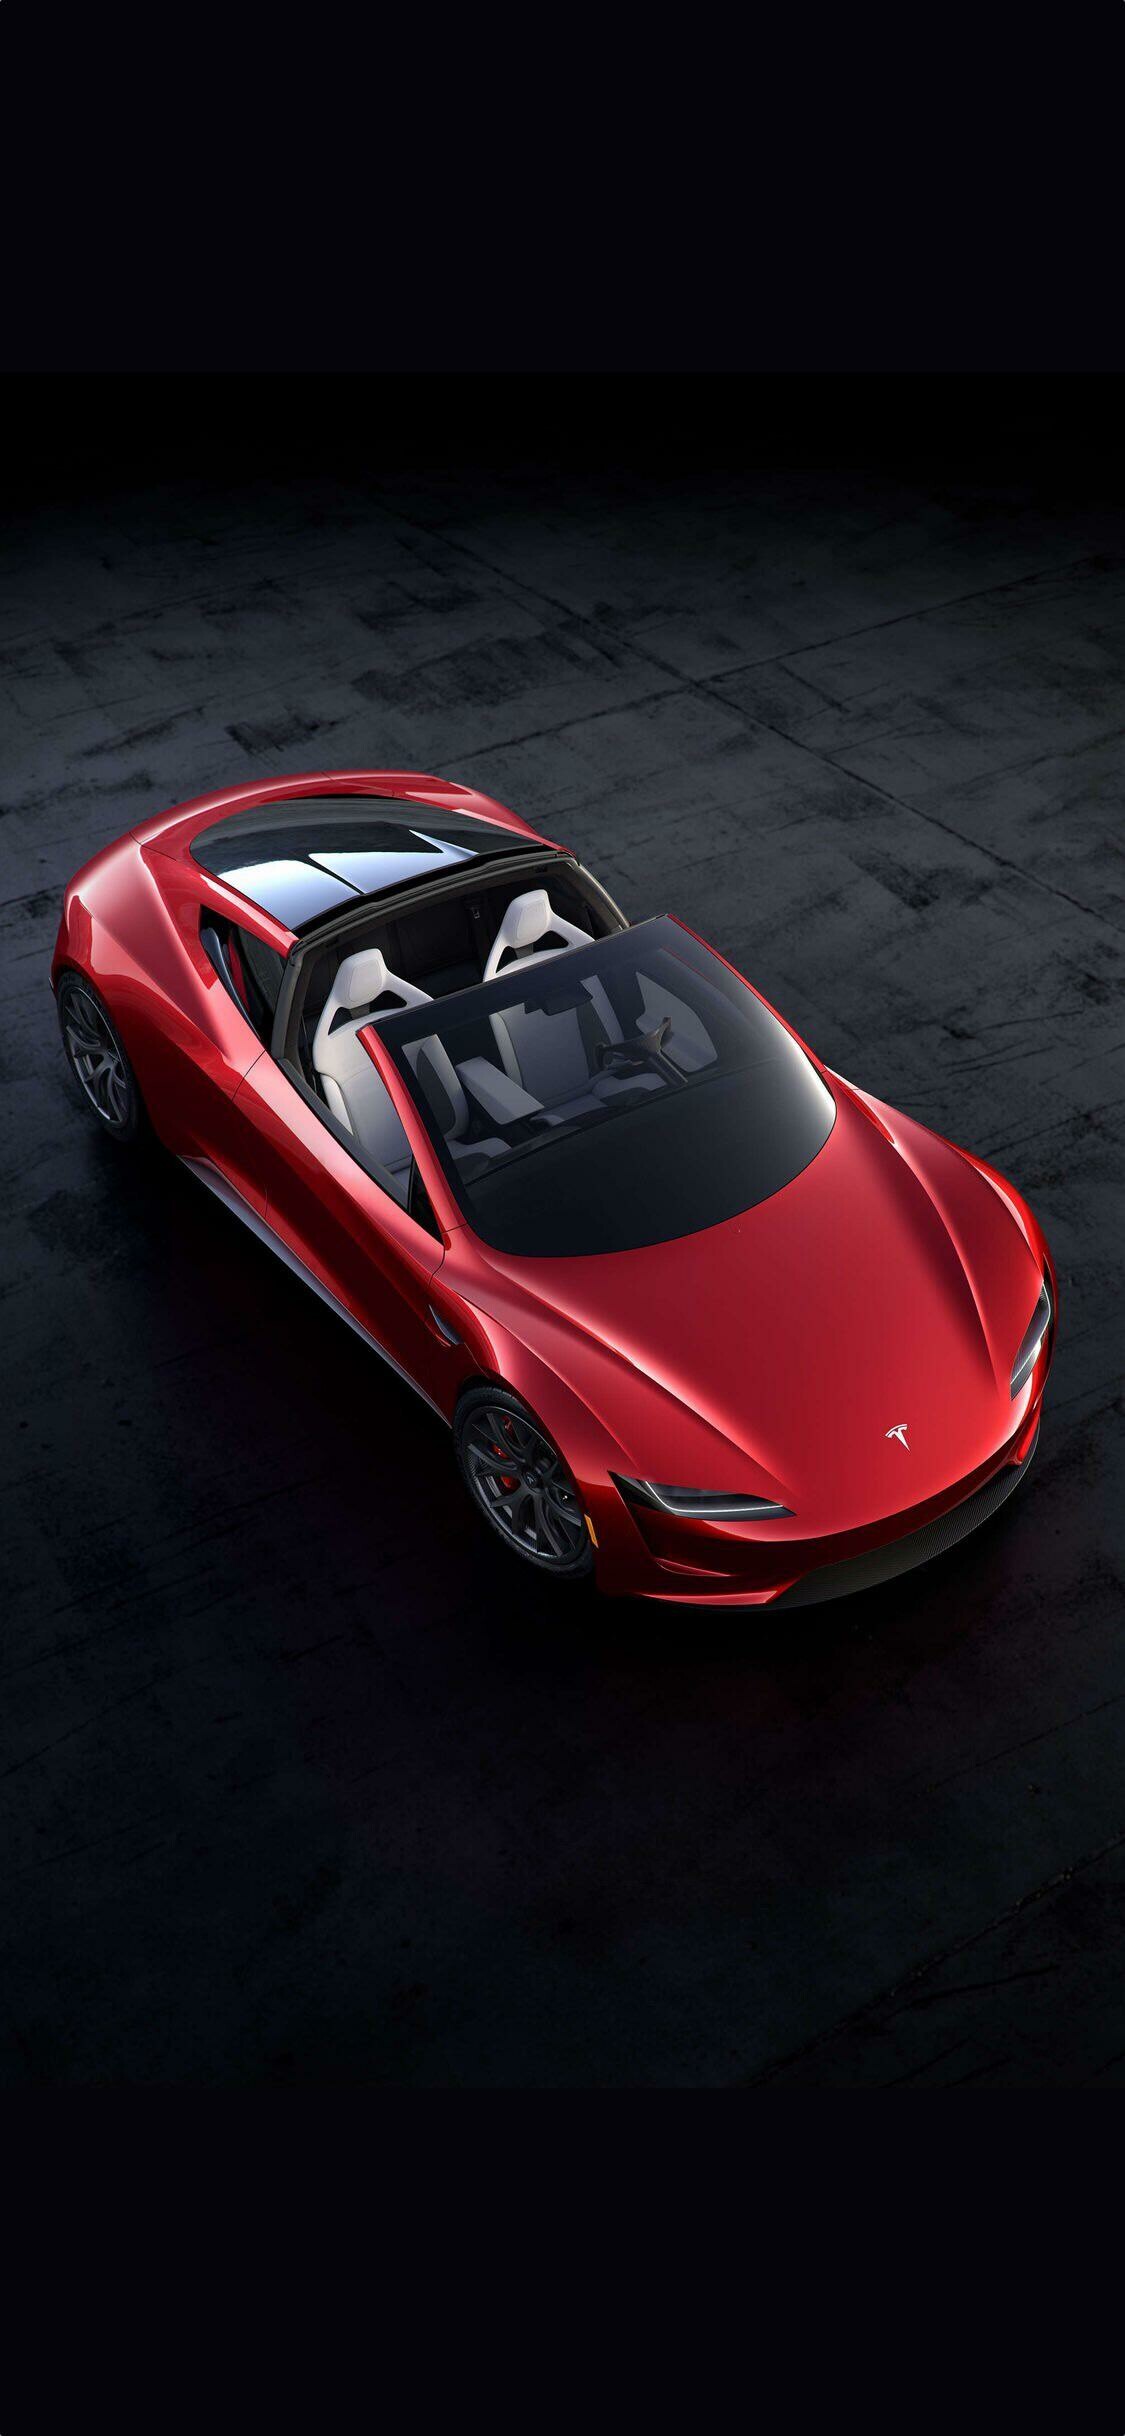 Tesla Model S: An American electric car manufacturer, Elon Musk, The electric sedan. 1130x2440 HD Wallpaper.